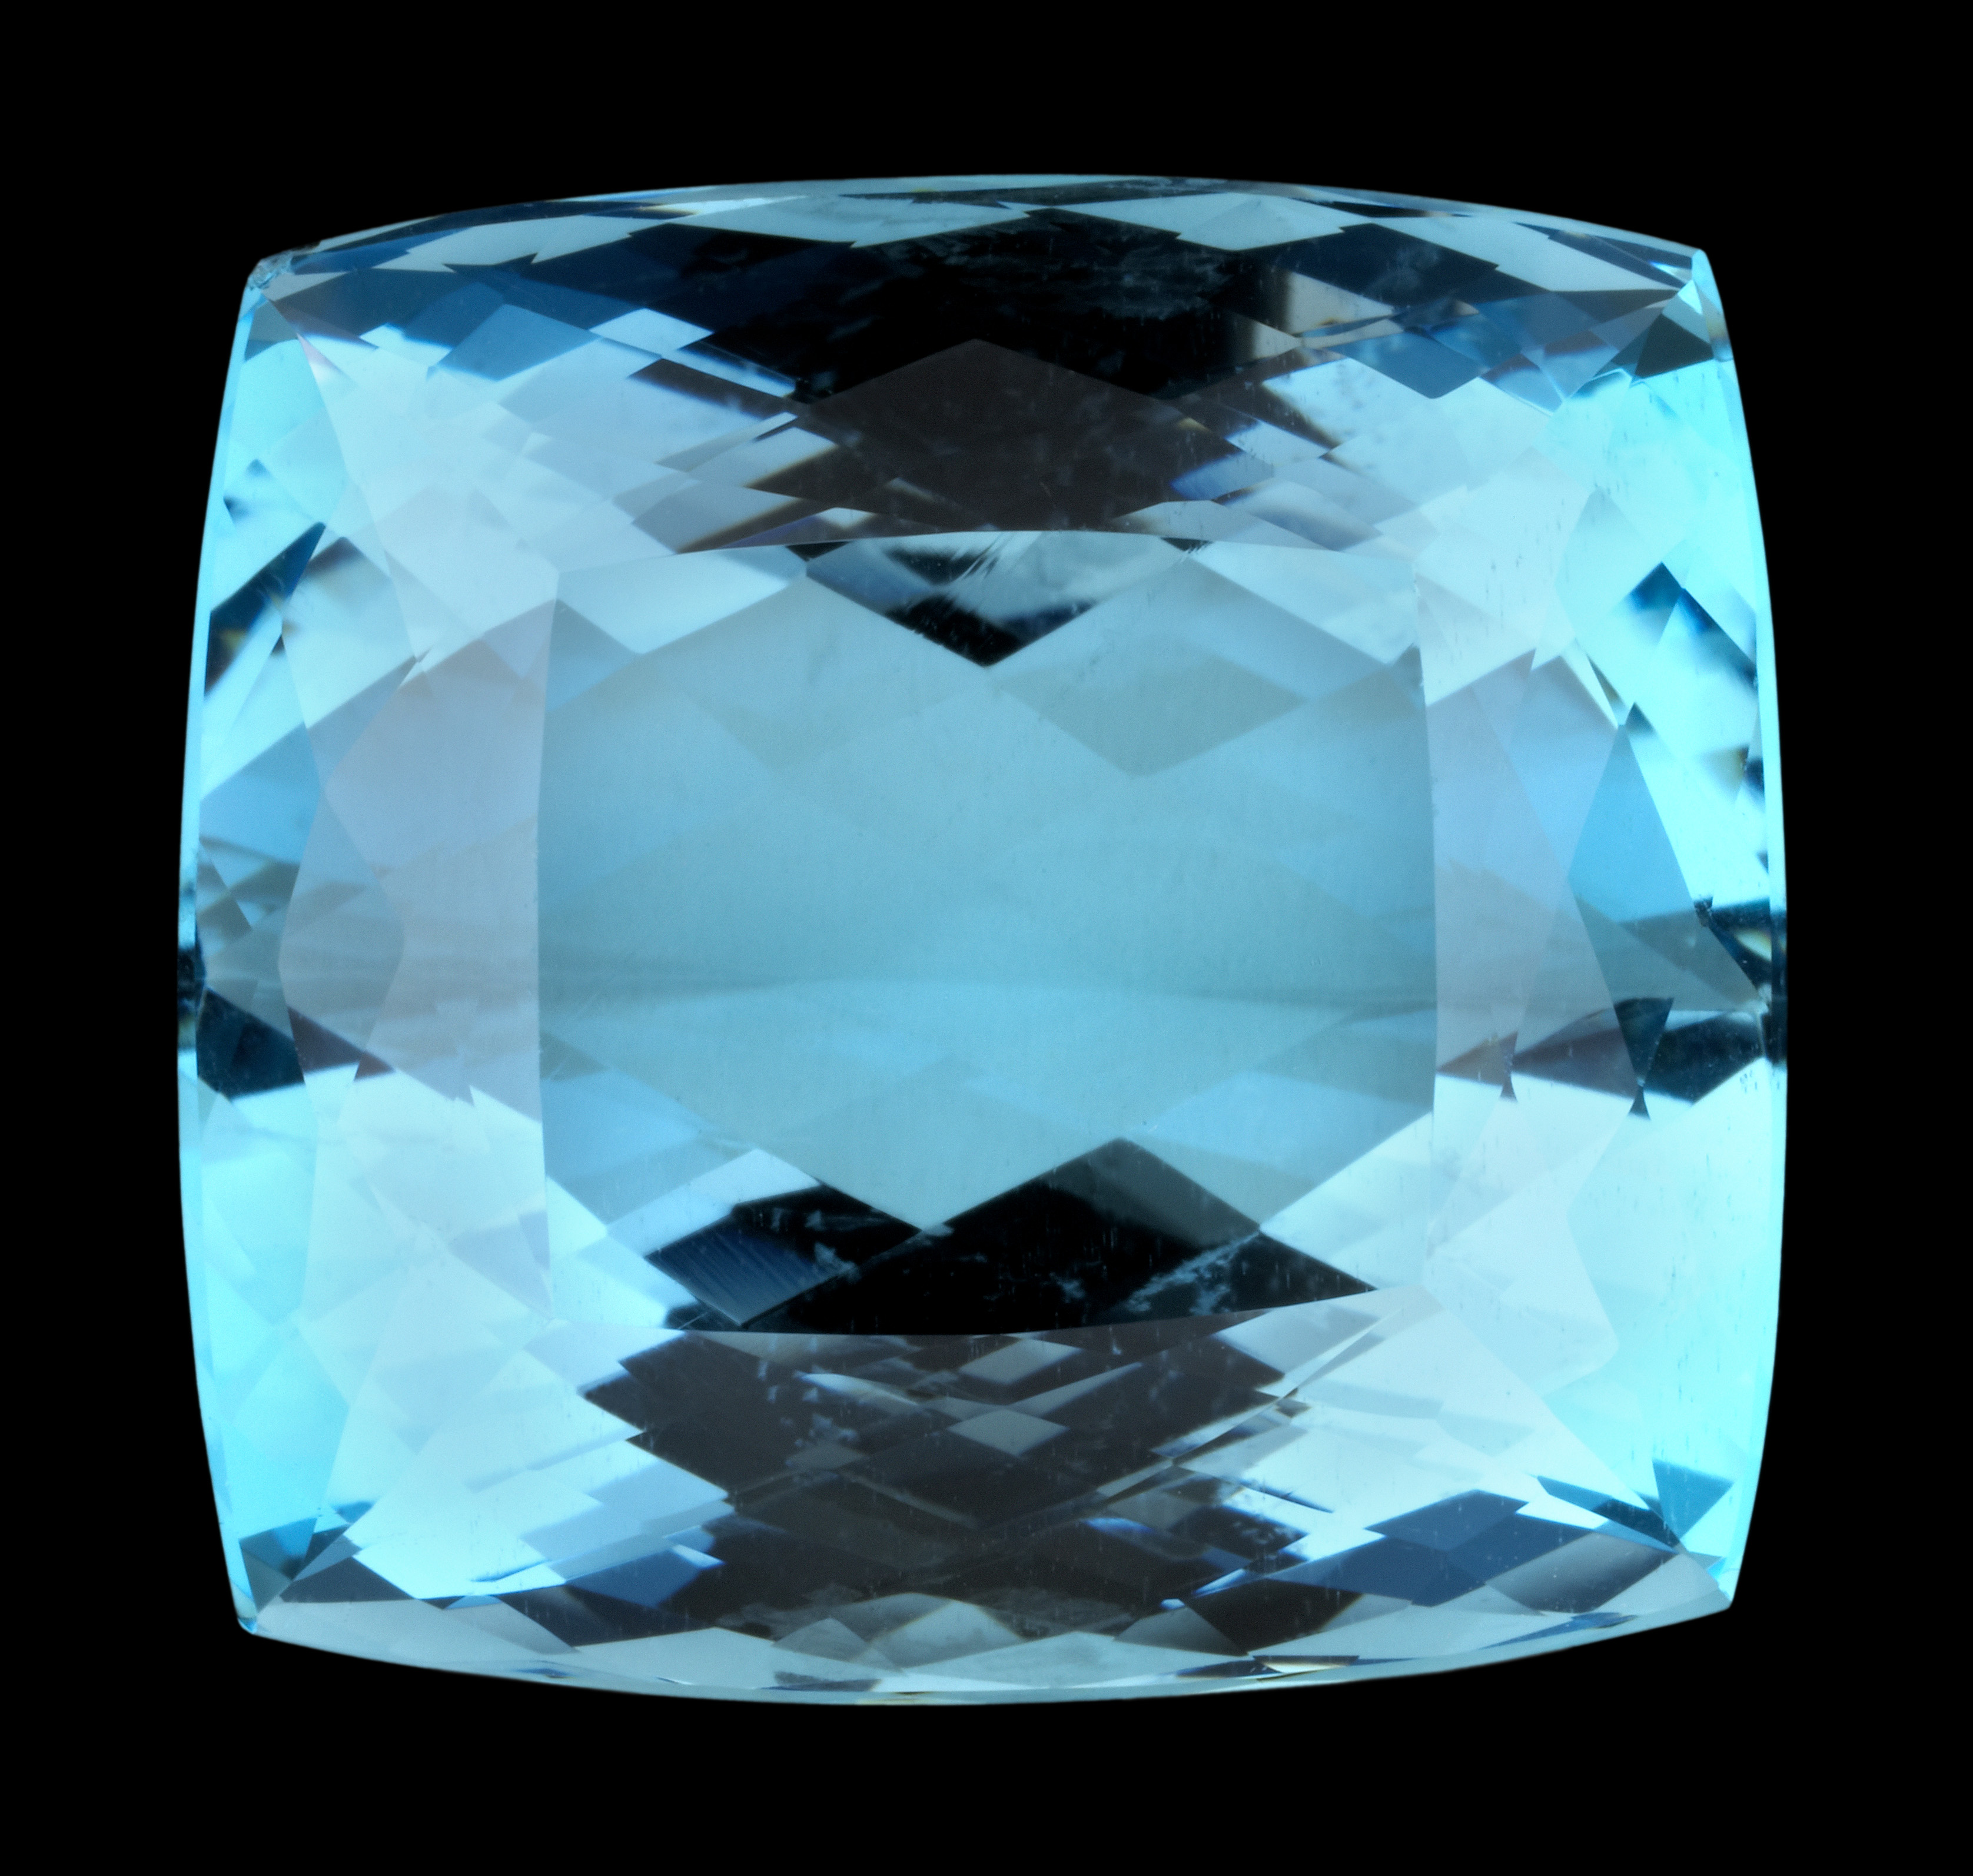 A rounded-square cut aquamarine gemstone, 29.7 carats.